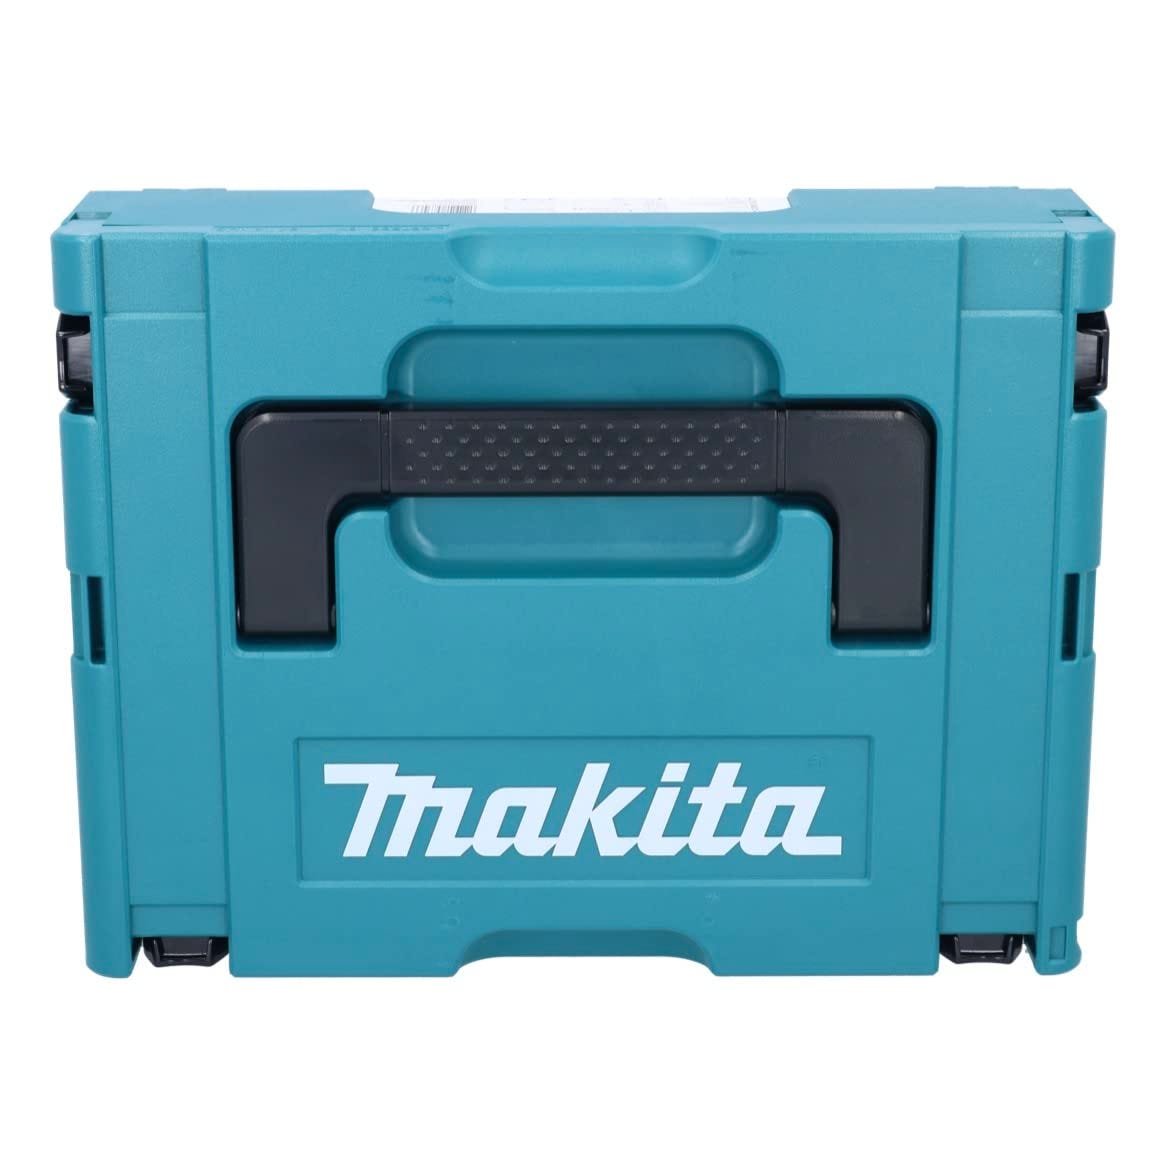 Coffret MAKPAC de 87 outils à main MAKITA E-11542 3